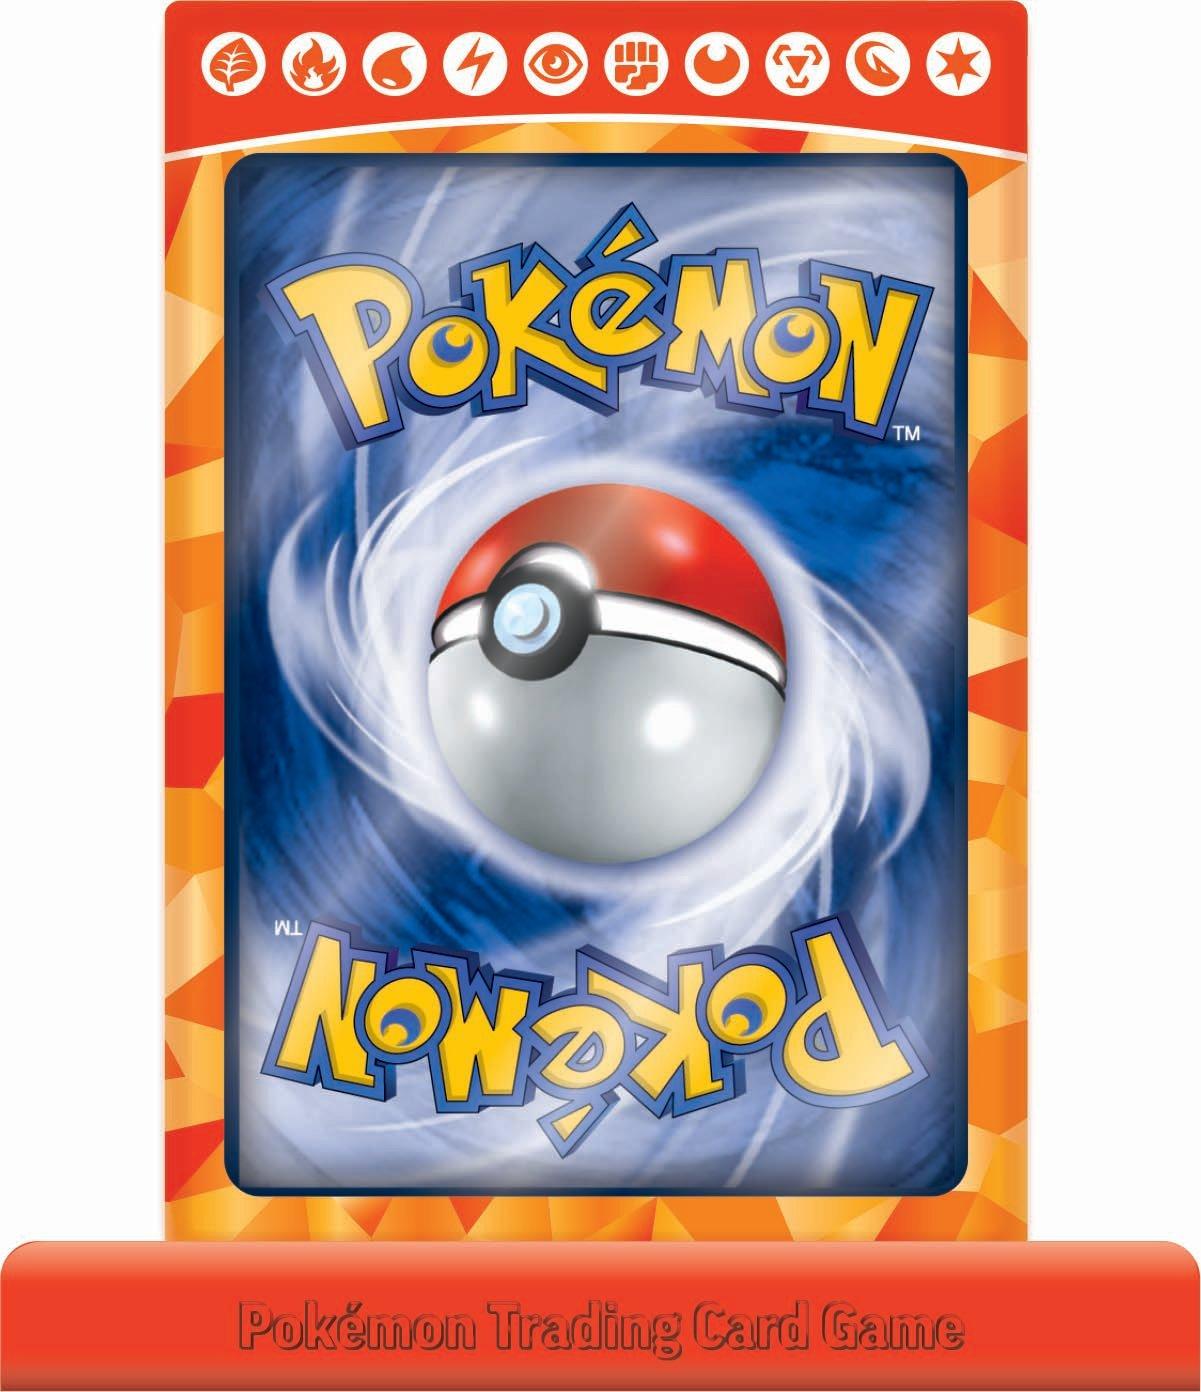 https://media.gamestop.com/i/gamestop/20007820_ALT04/Pokemon-Trading-Card-Game-Charizard-ex-Premium-Collection?$pdp$